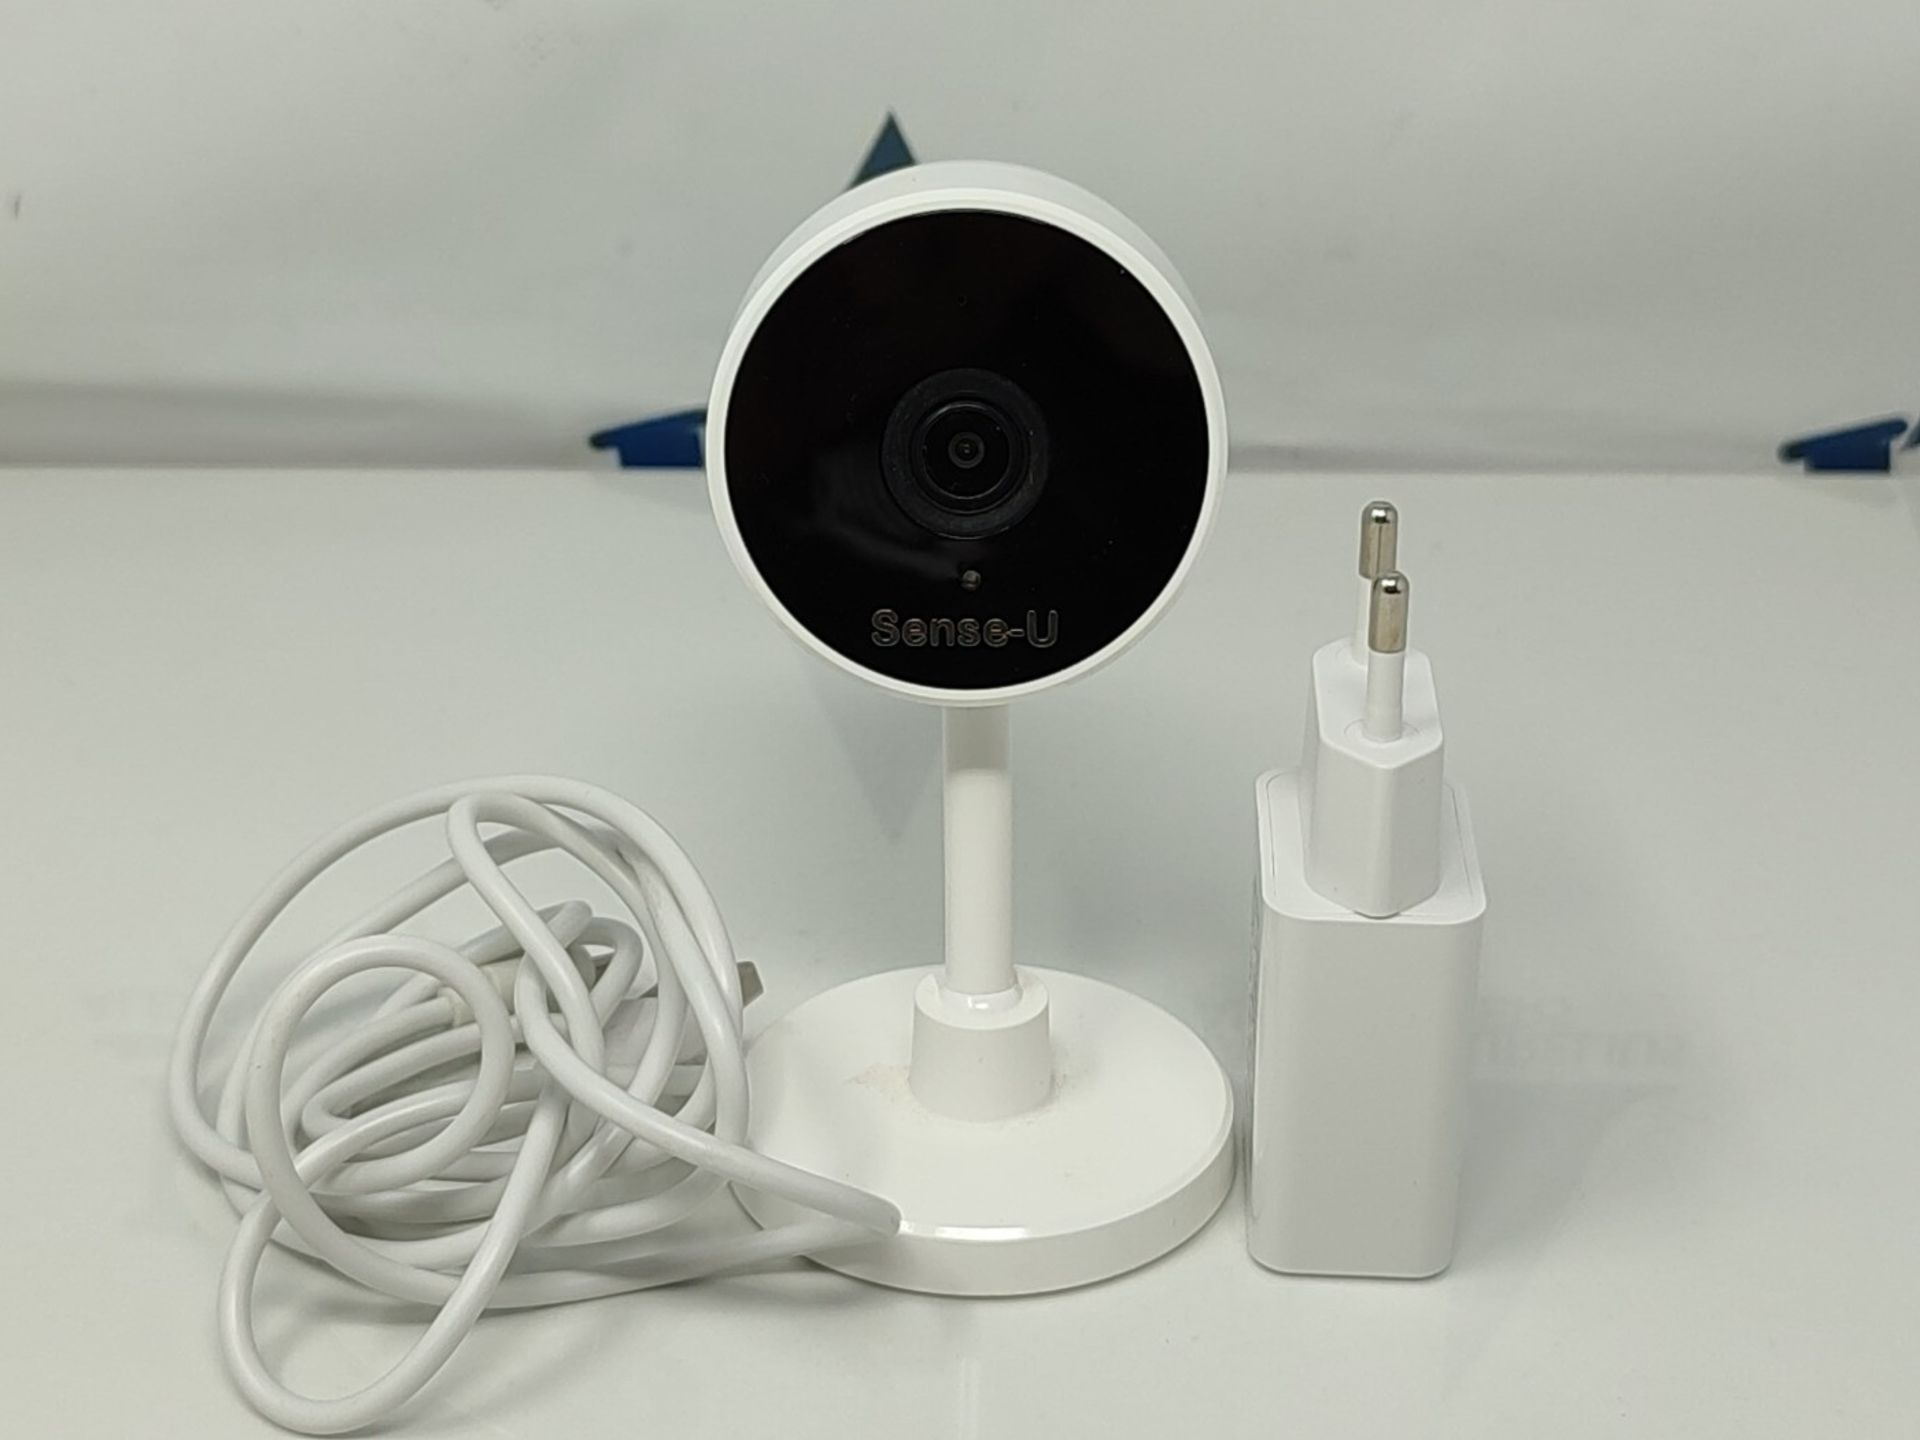 RRP £118.00 Sense-U Video Baby Monitor with Camera 1080P HD Video, 2-Way Talk, Night Vision, Motio - Image 2 of 2